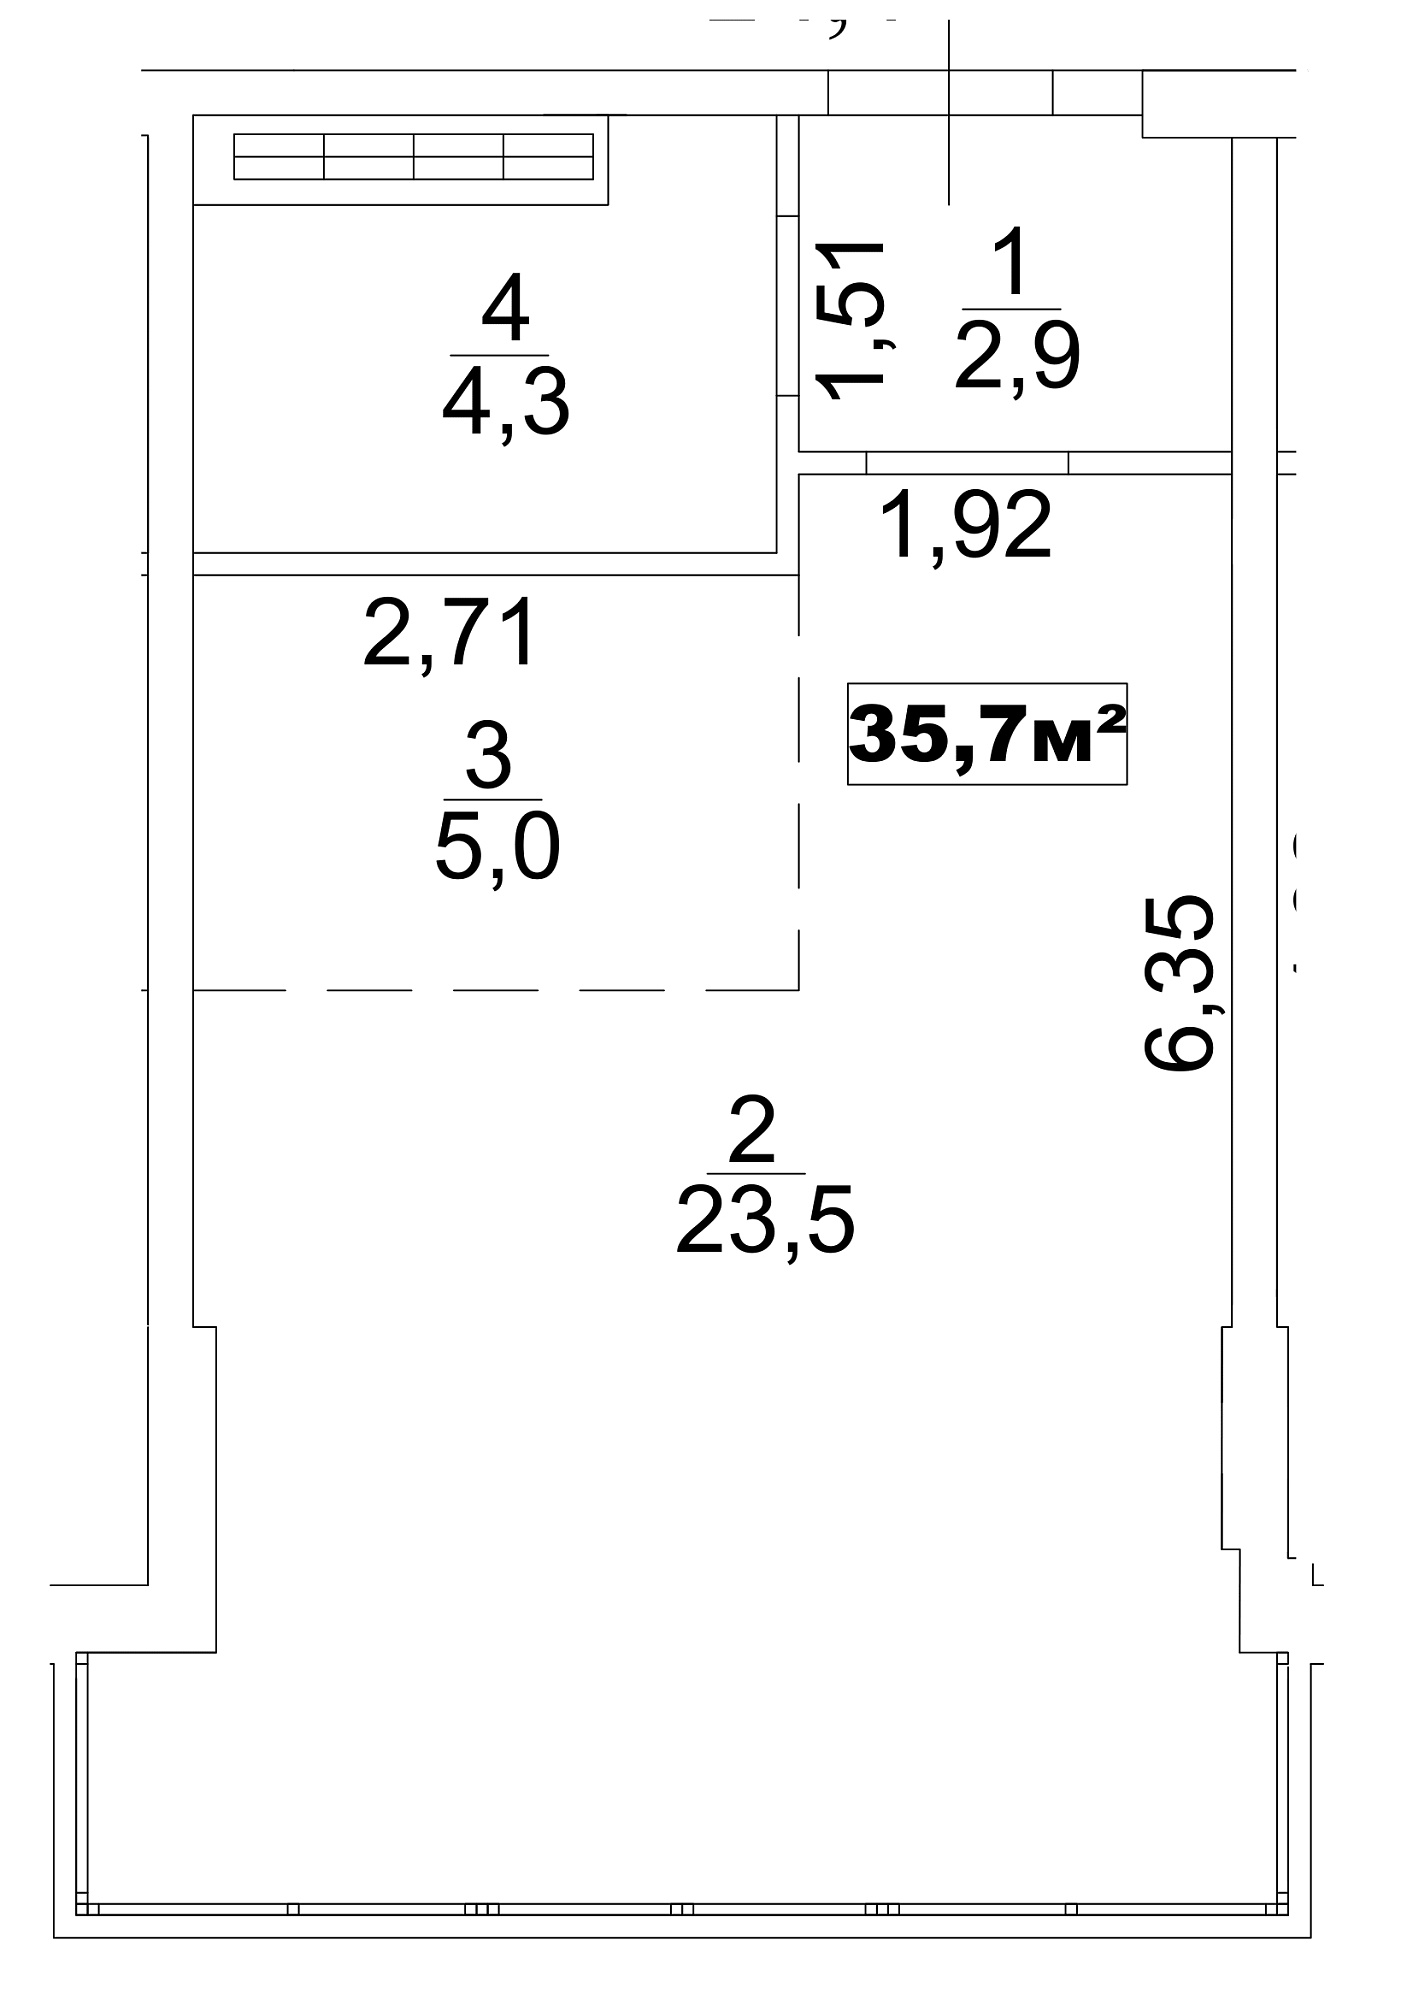 Планировка Smart-квартира площей 35.7м2, AB-13-06/0043б.